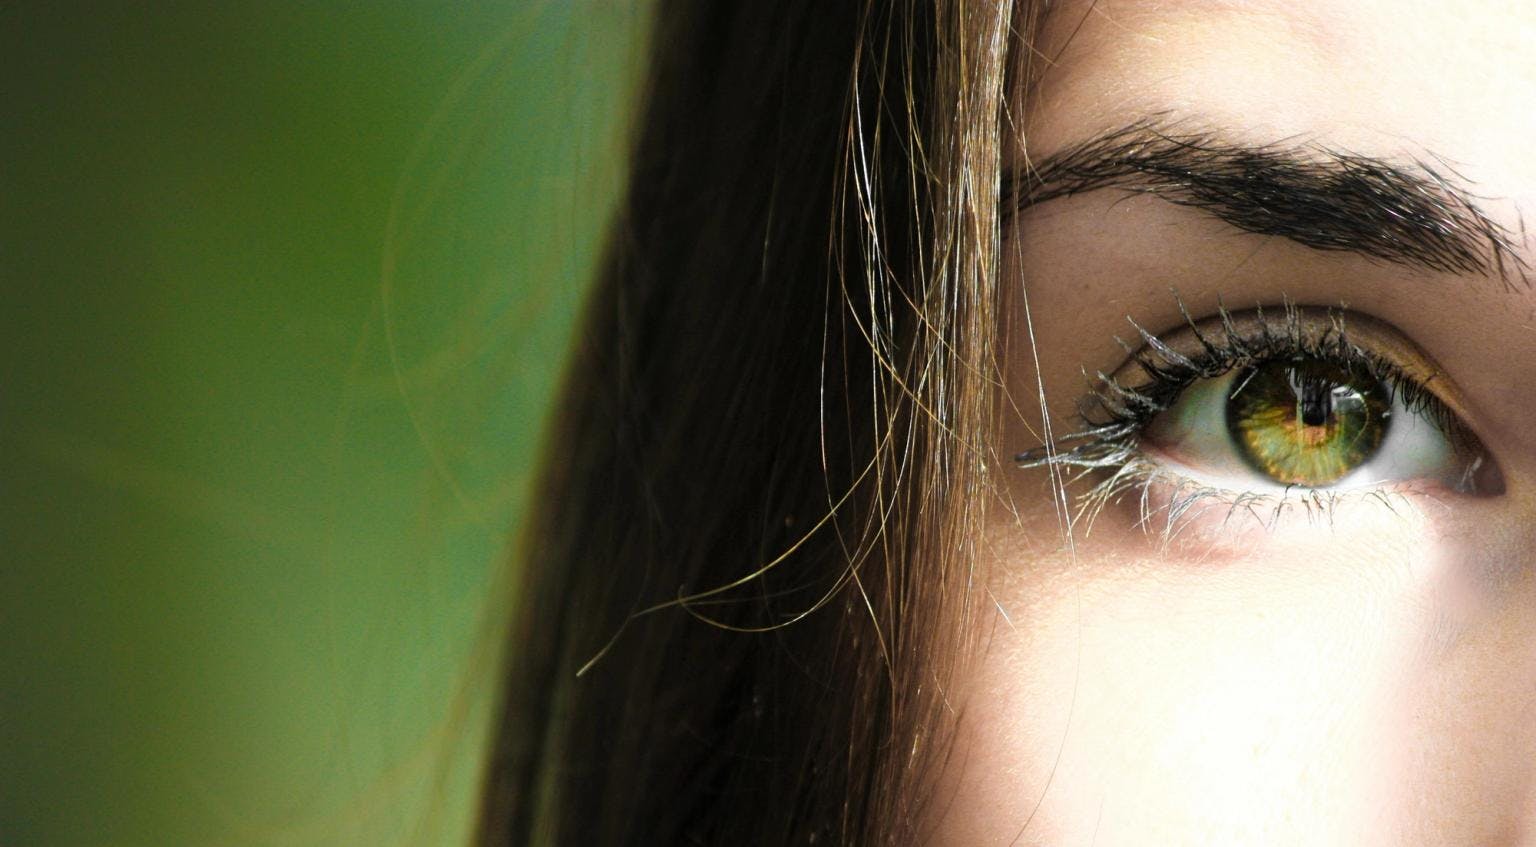 A close up shot of a woman's green eye